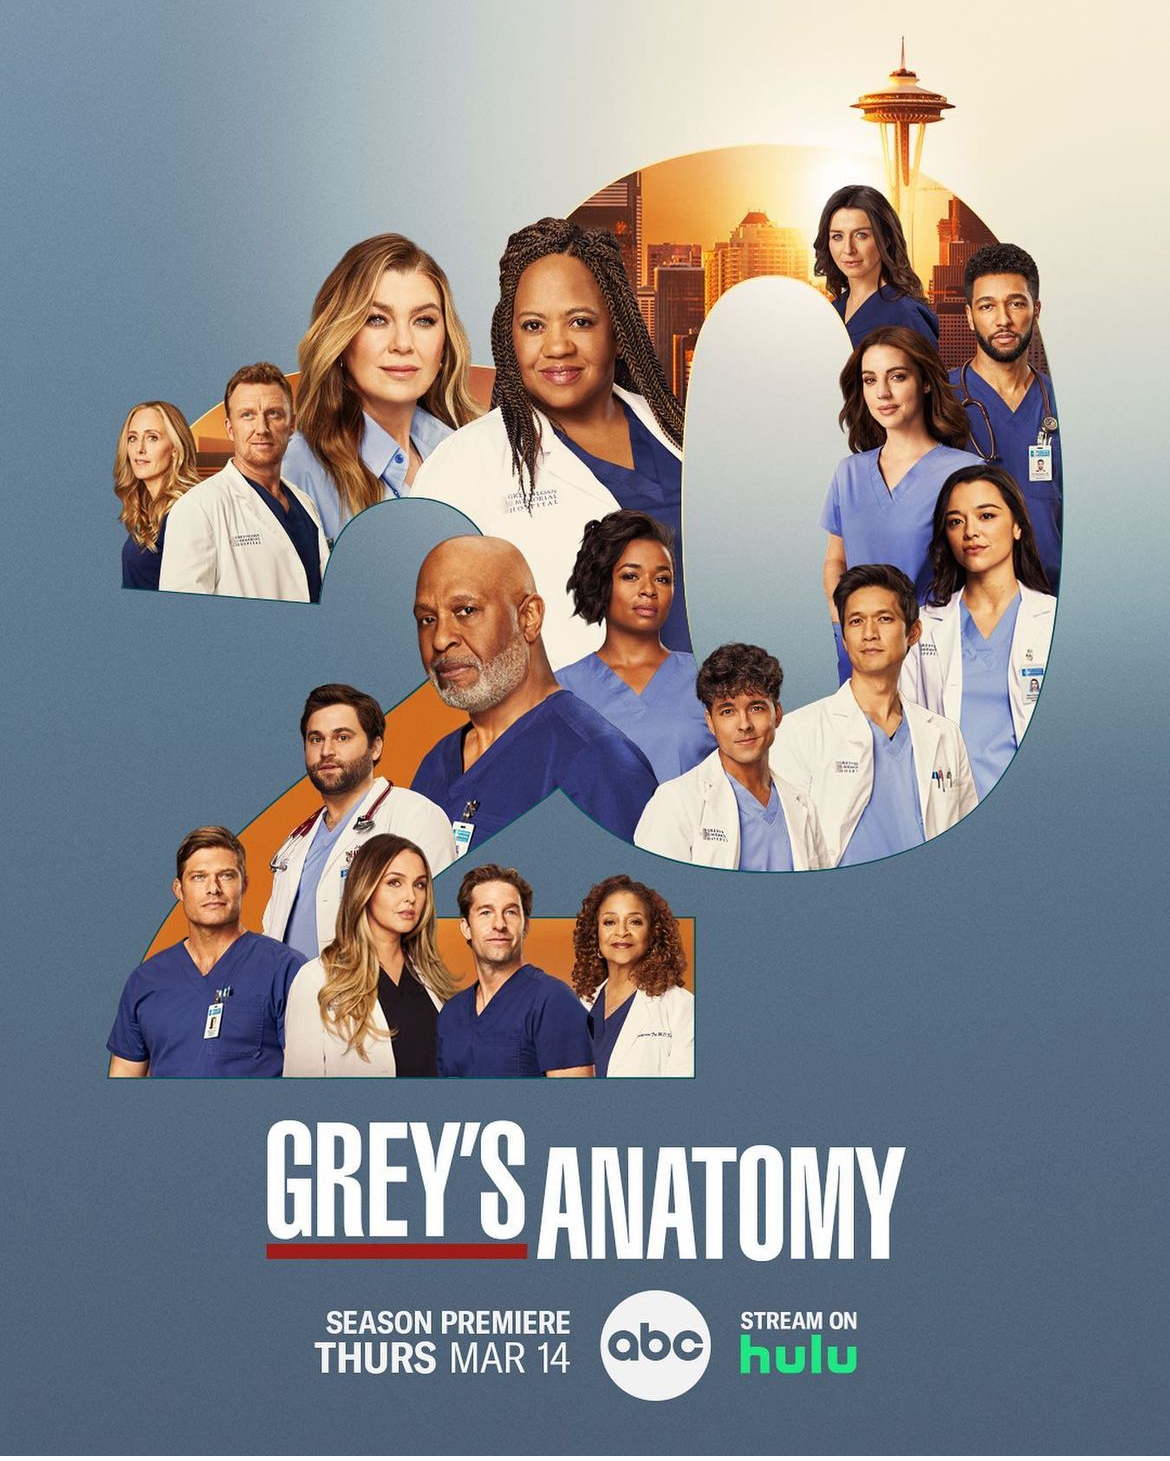 #4: Greys Anatomy